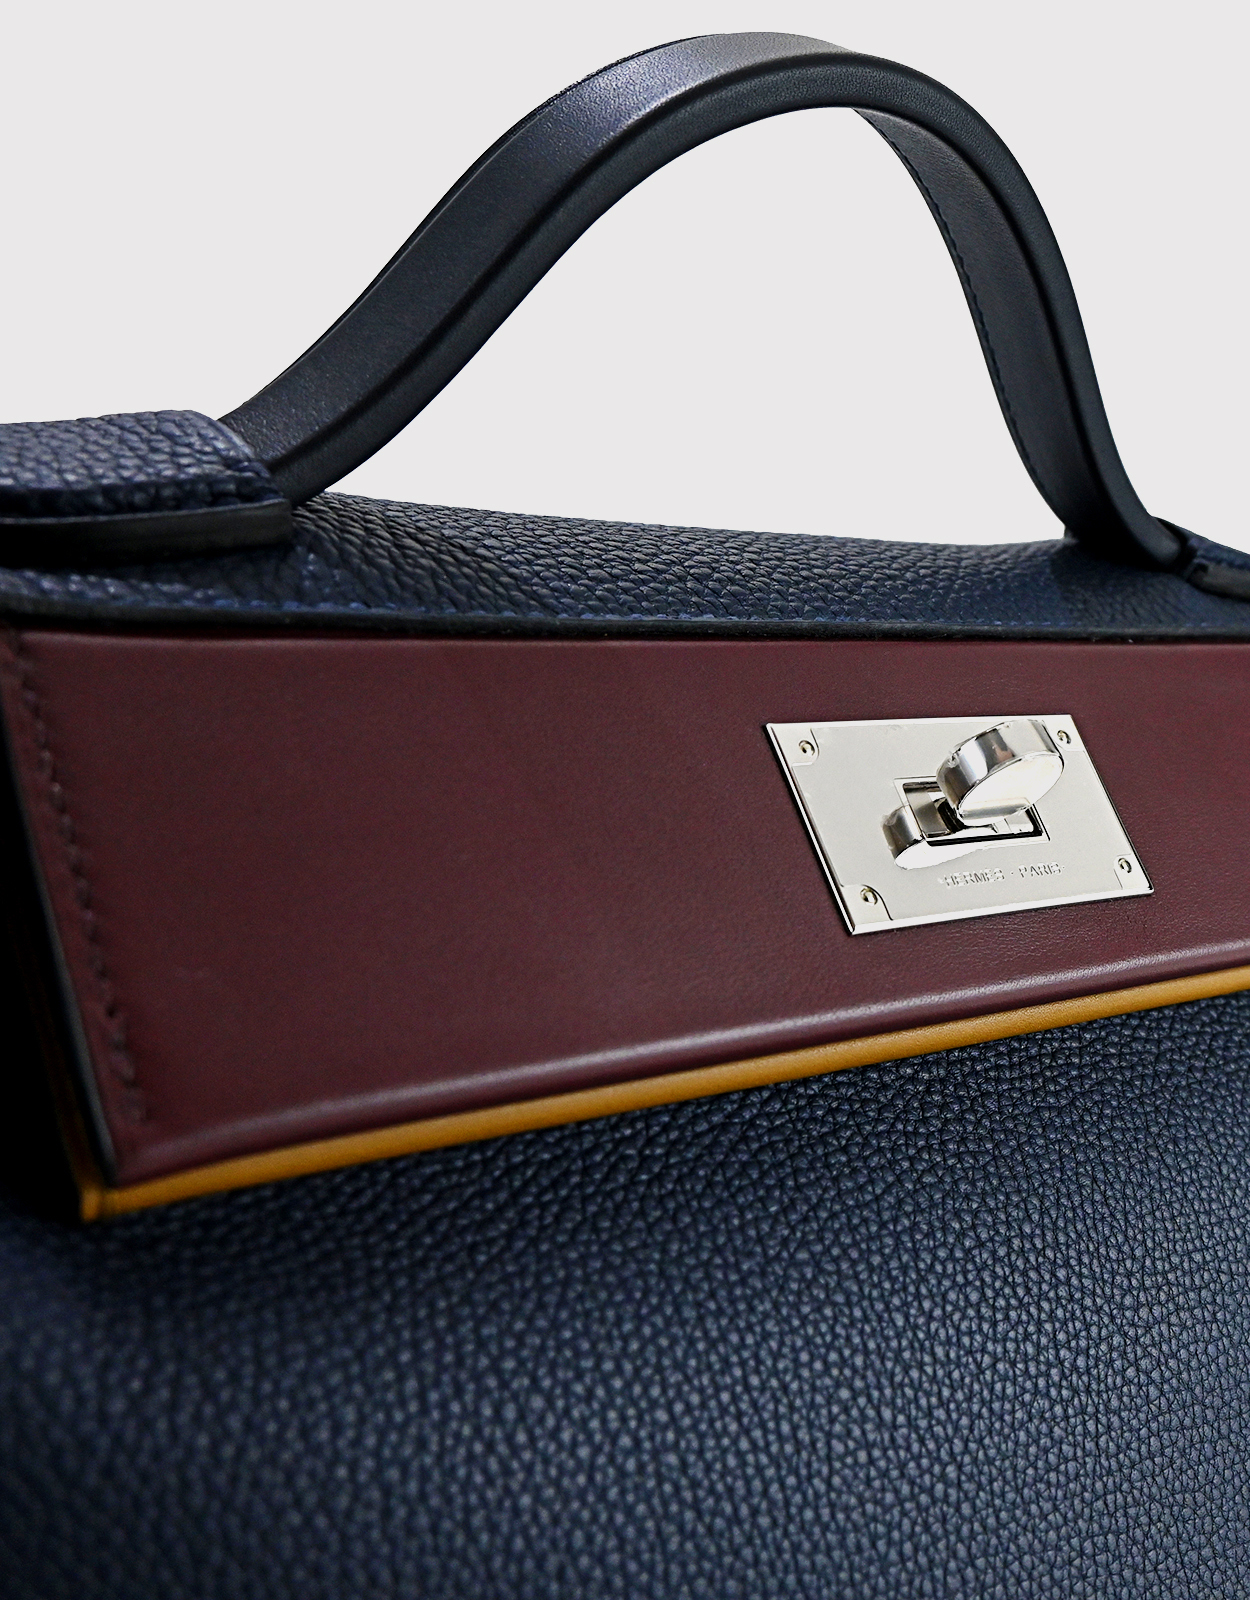 Hermès 24/24 29 Etain Swift and Togo Leather Gold Hardware